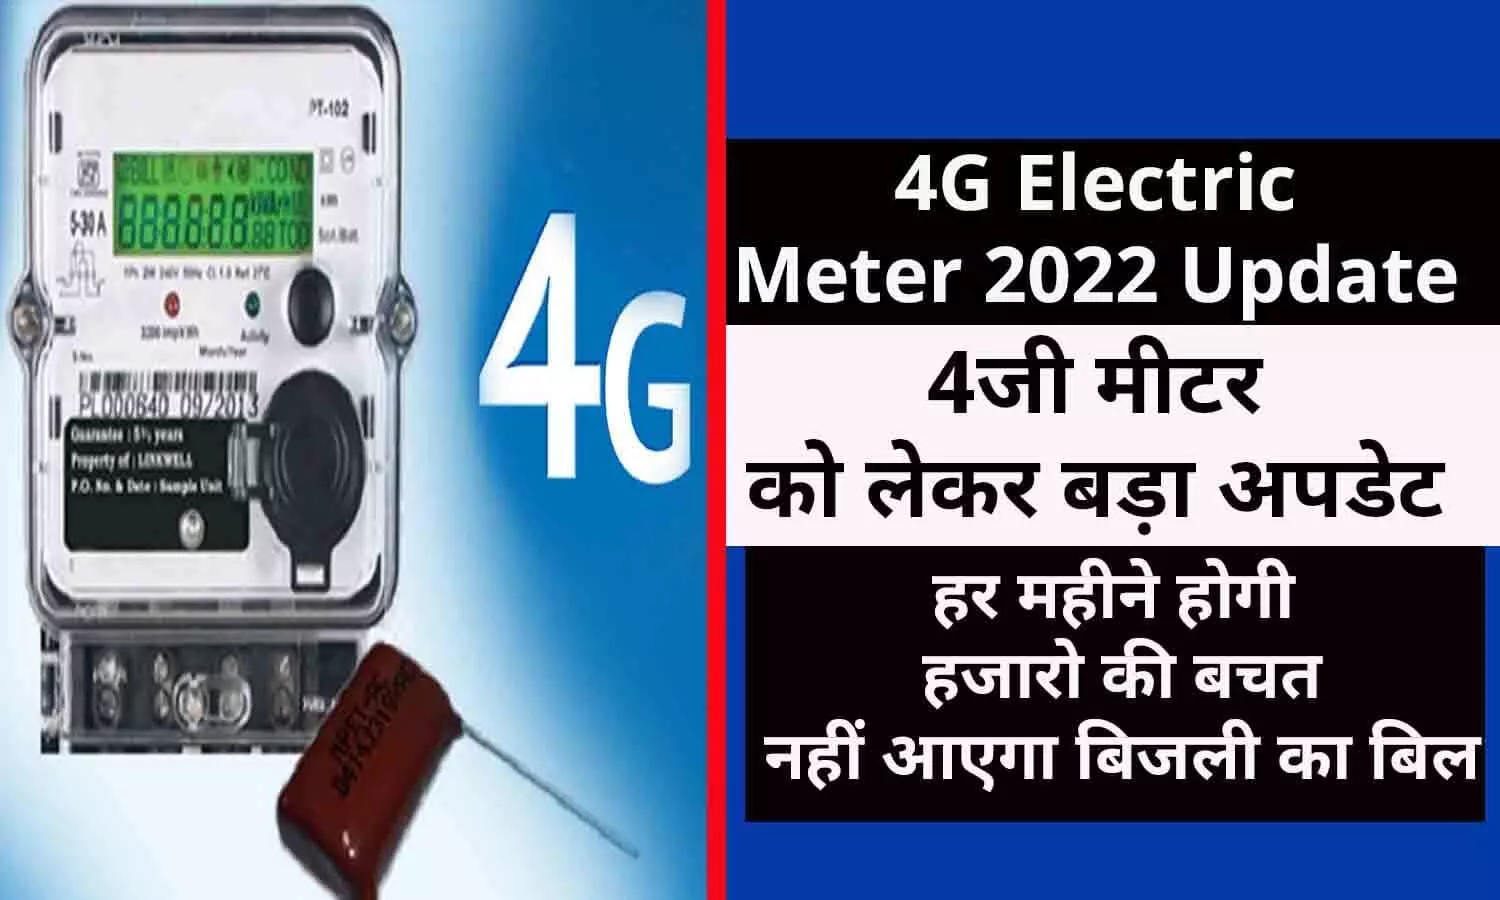 4G Electric Meter